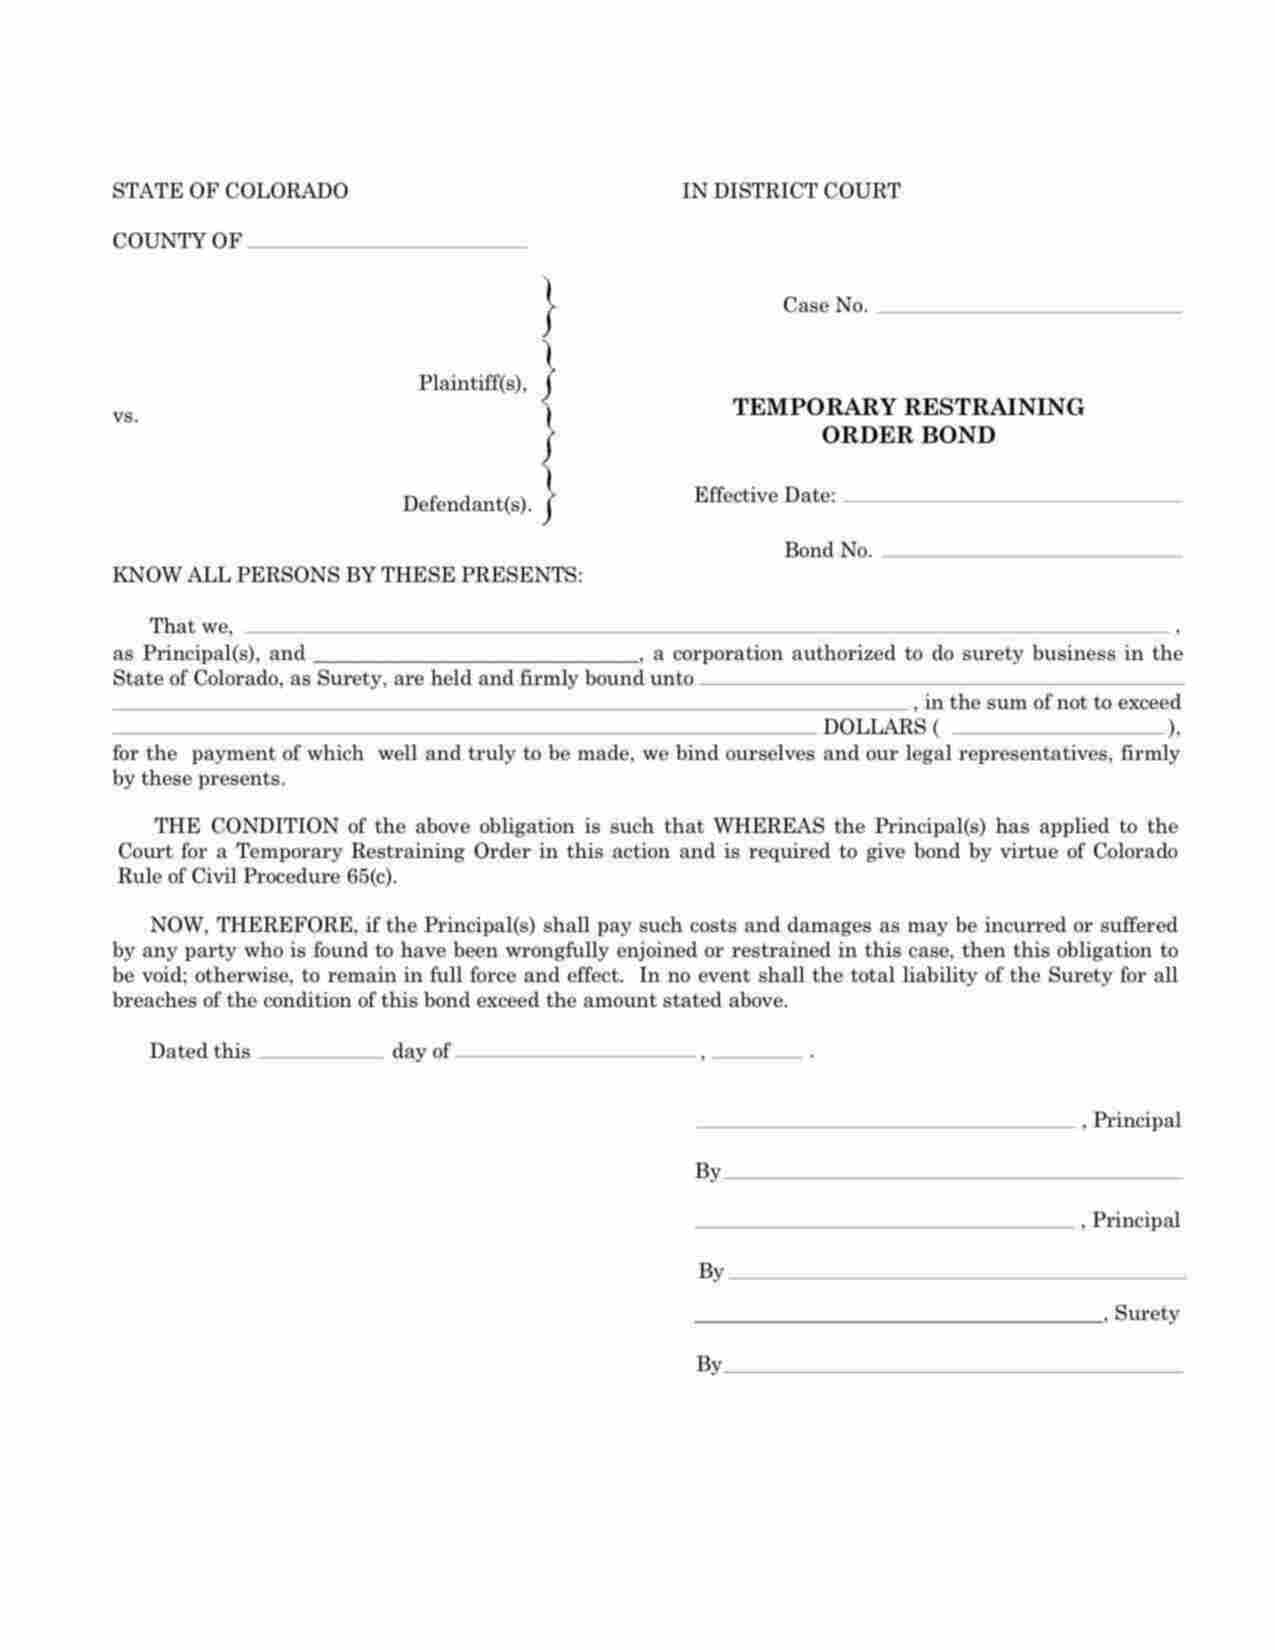 Colorado Temporary Restraining Order Bond Form